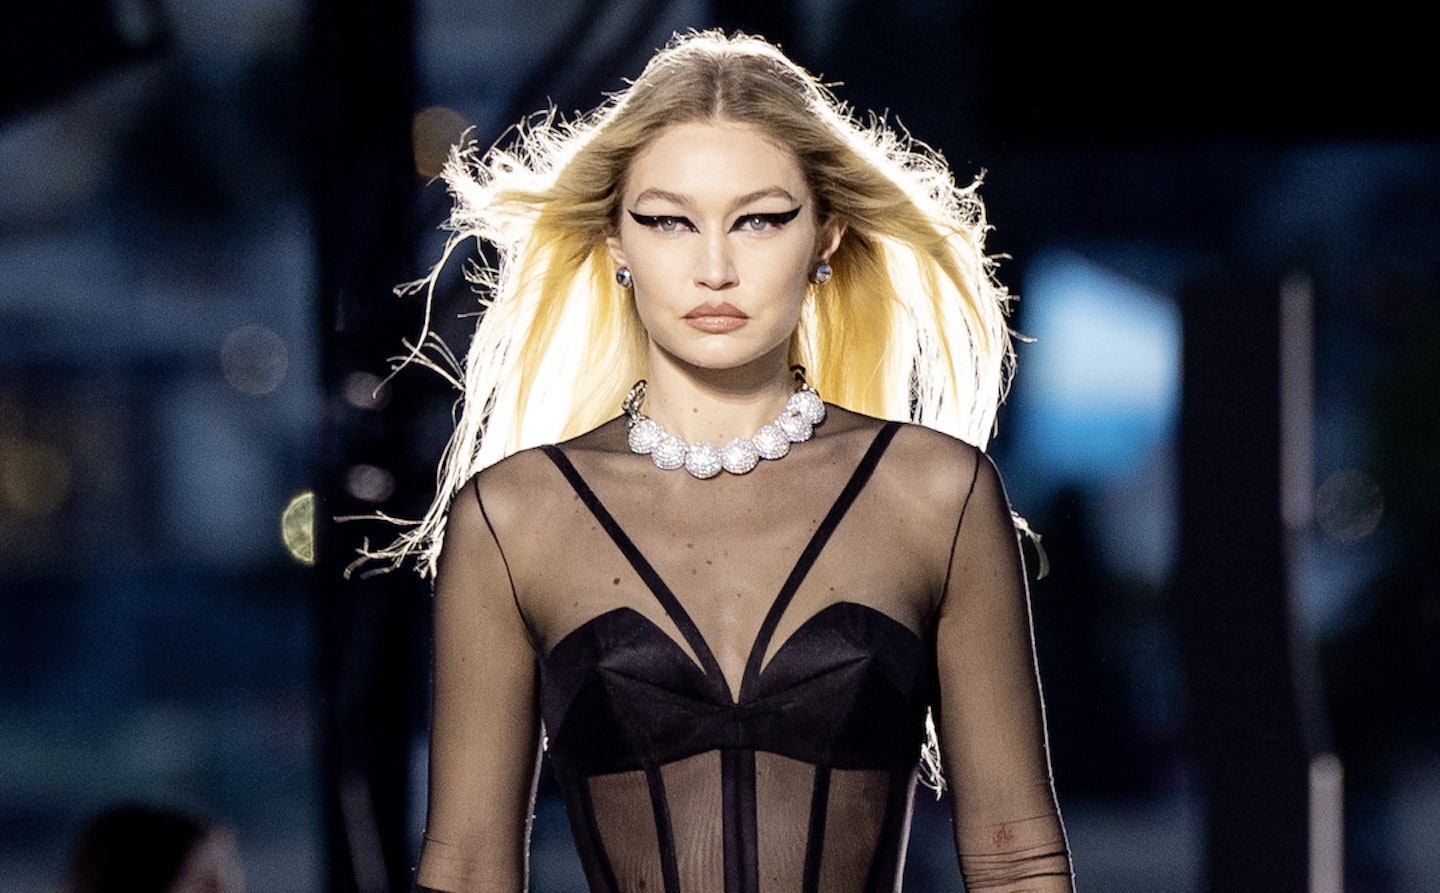 Gigi Hadid returns to the Versace catwalk in a crop top, six